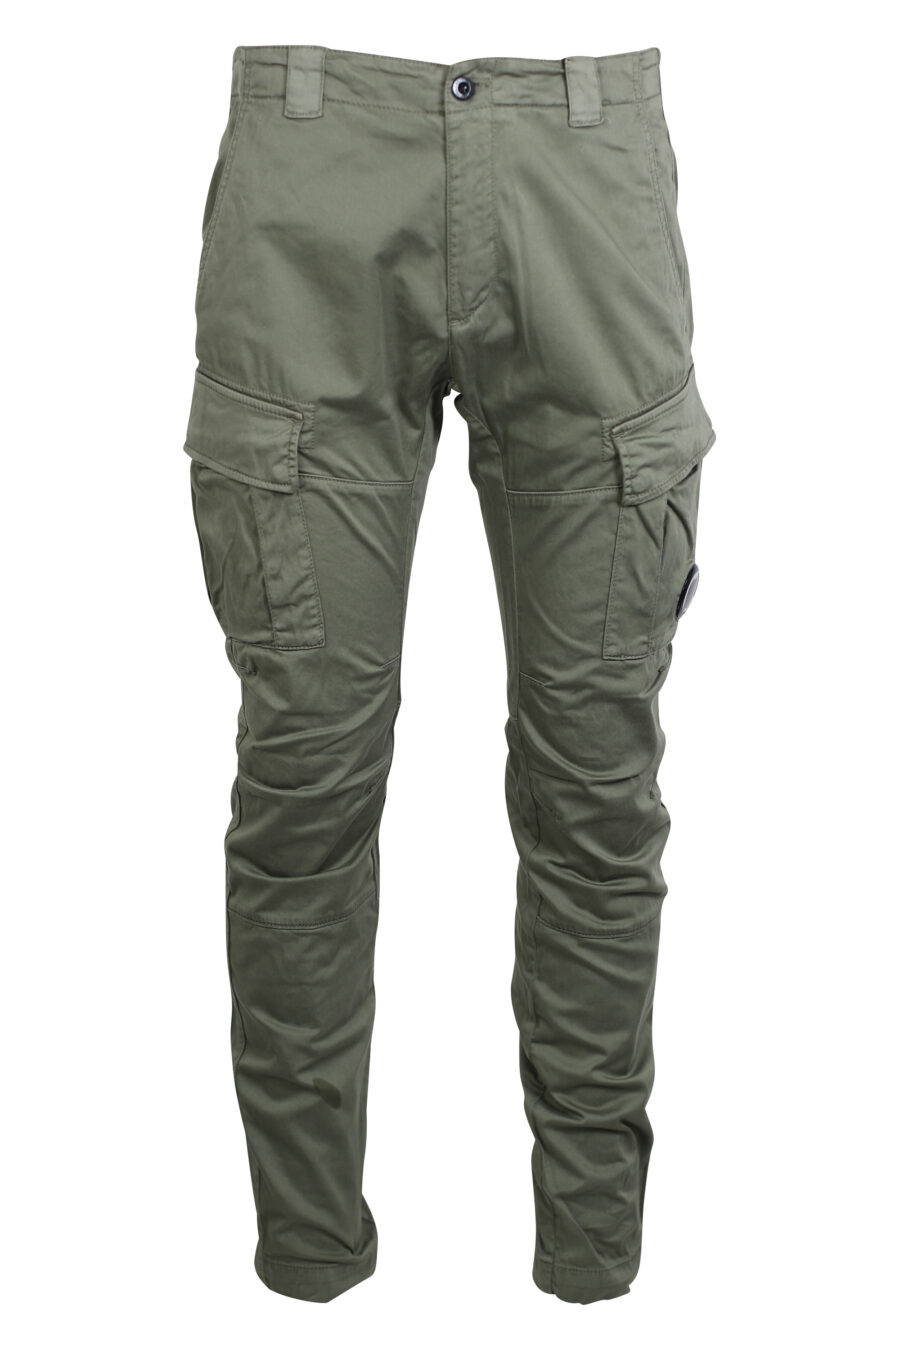 Pantalon cargo vert militaire avec mini-logo circulaire - IMG 2483